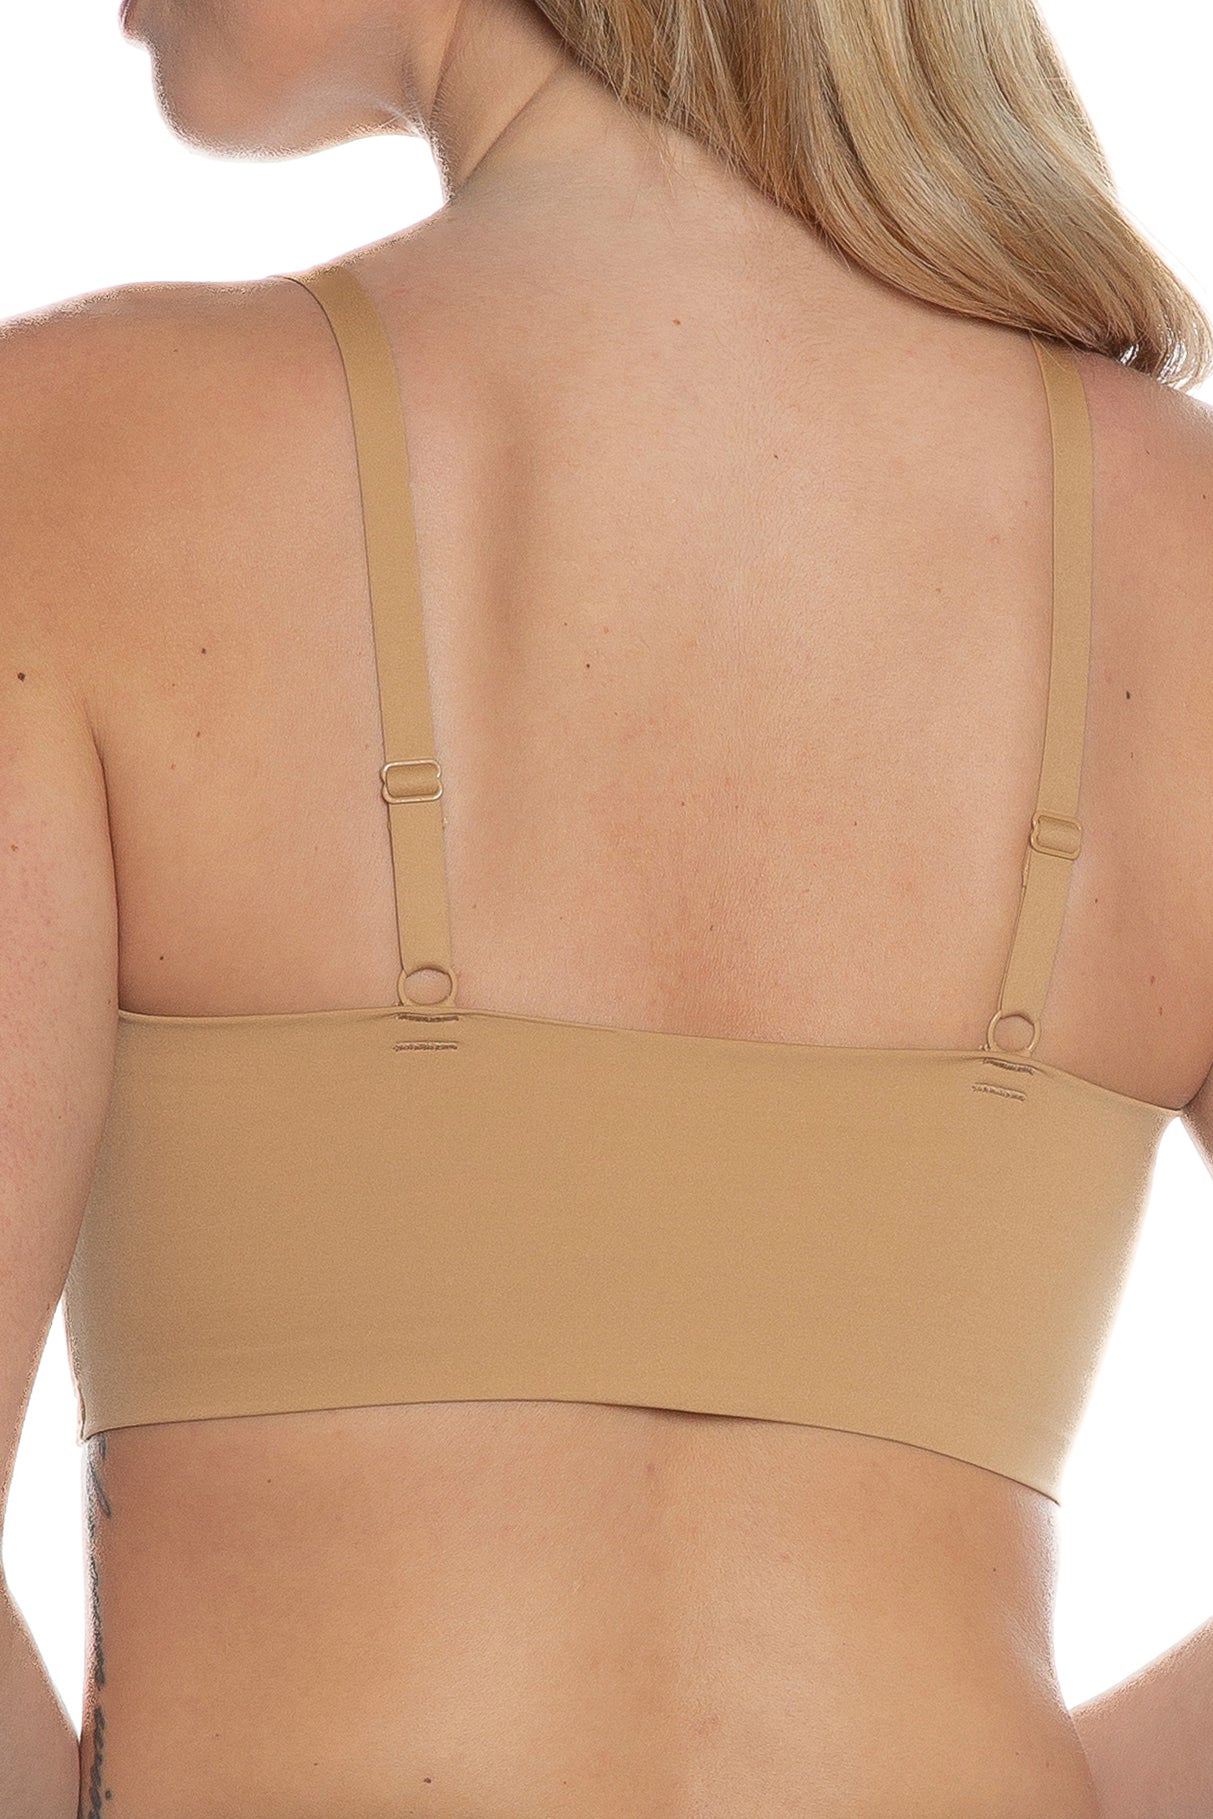 Women's Rhonda Shear 1699 Gel Wireless Bra with No Back Closure